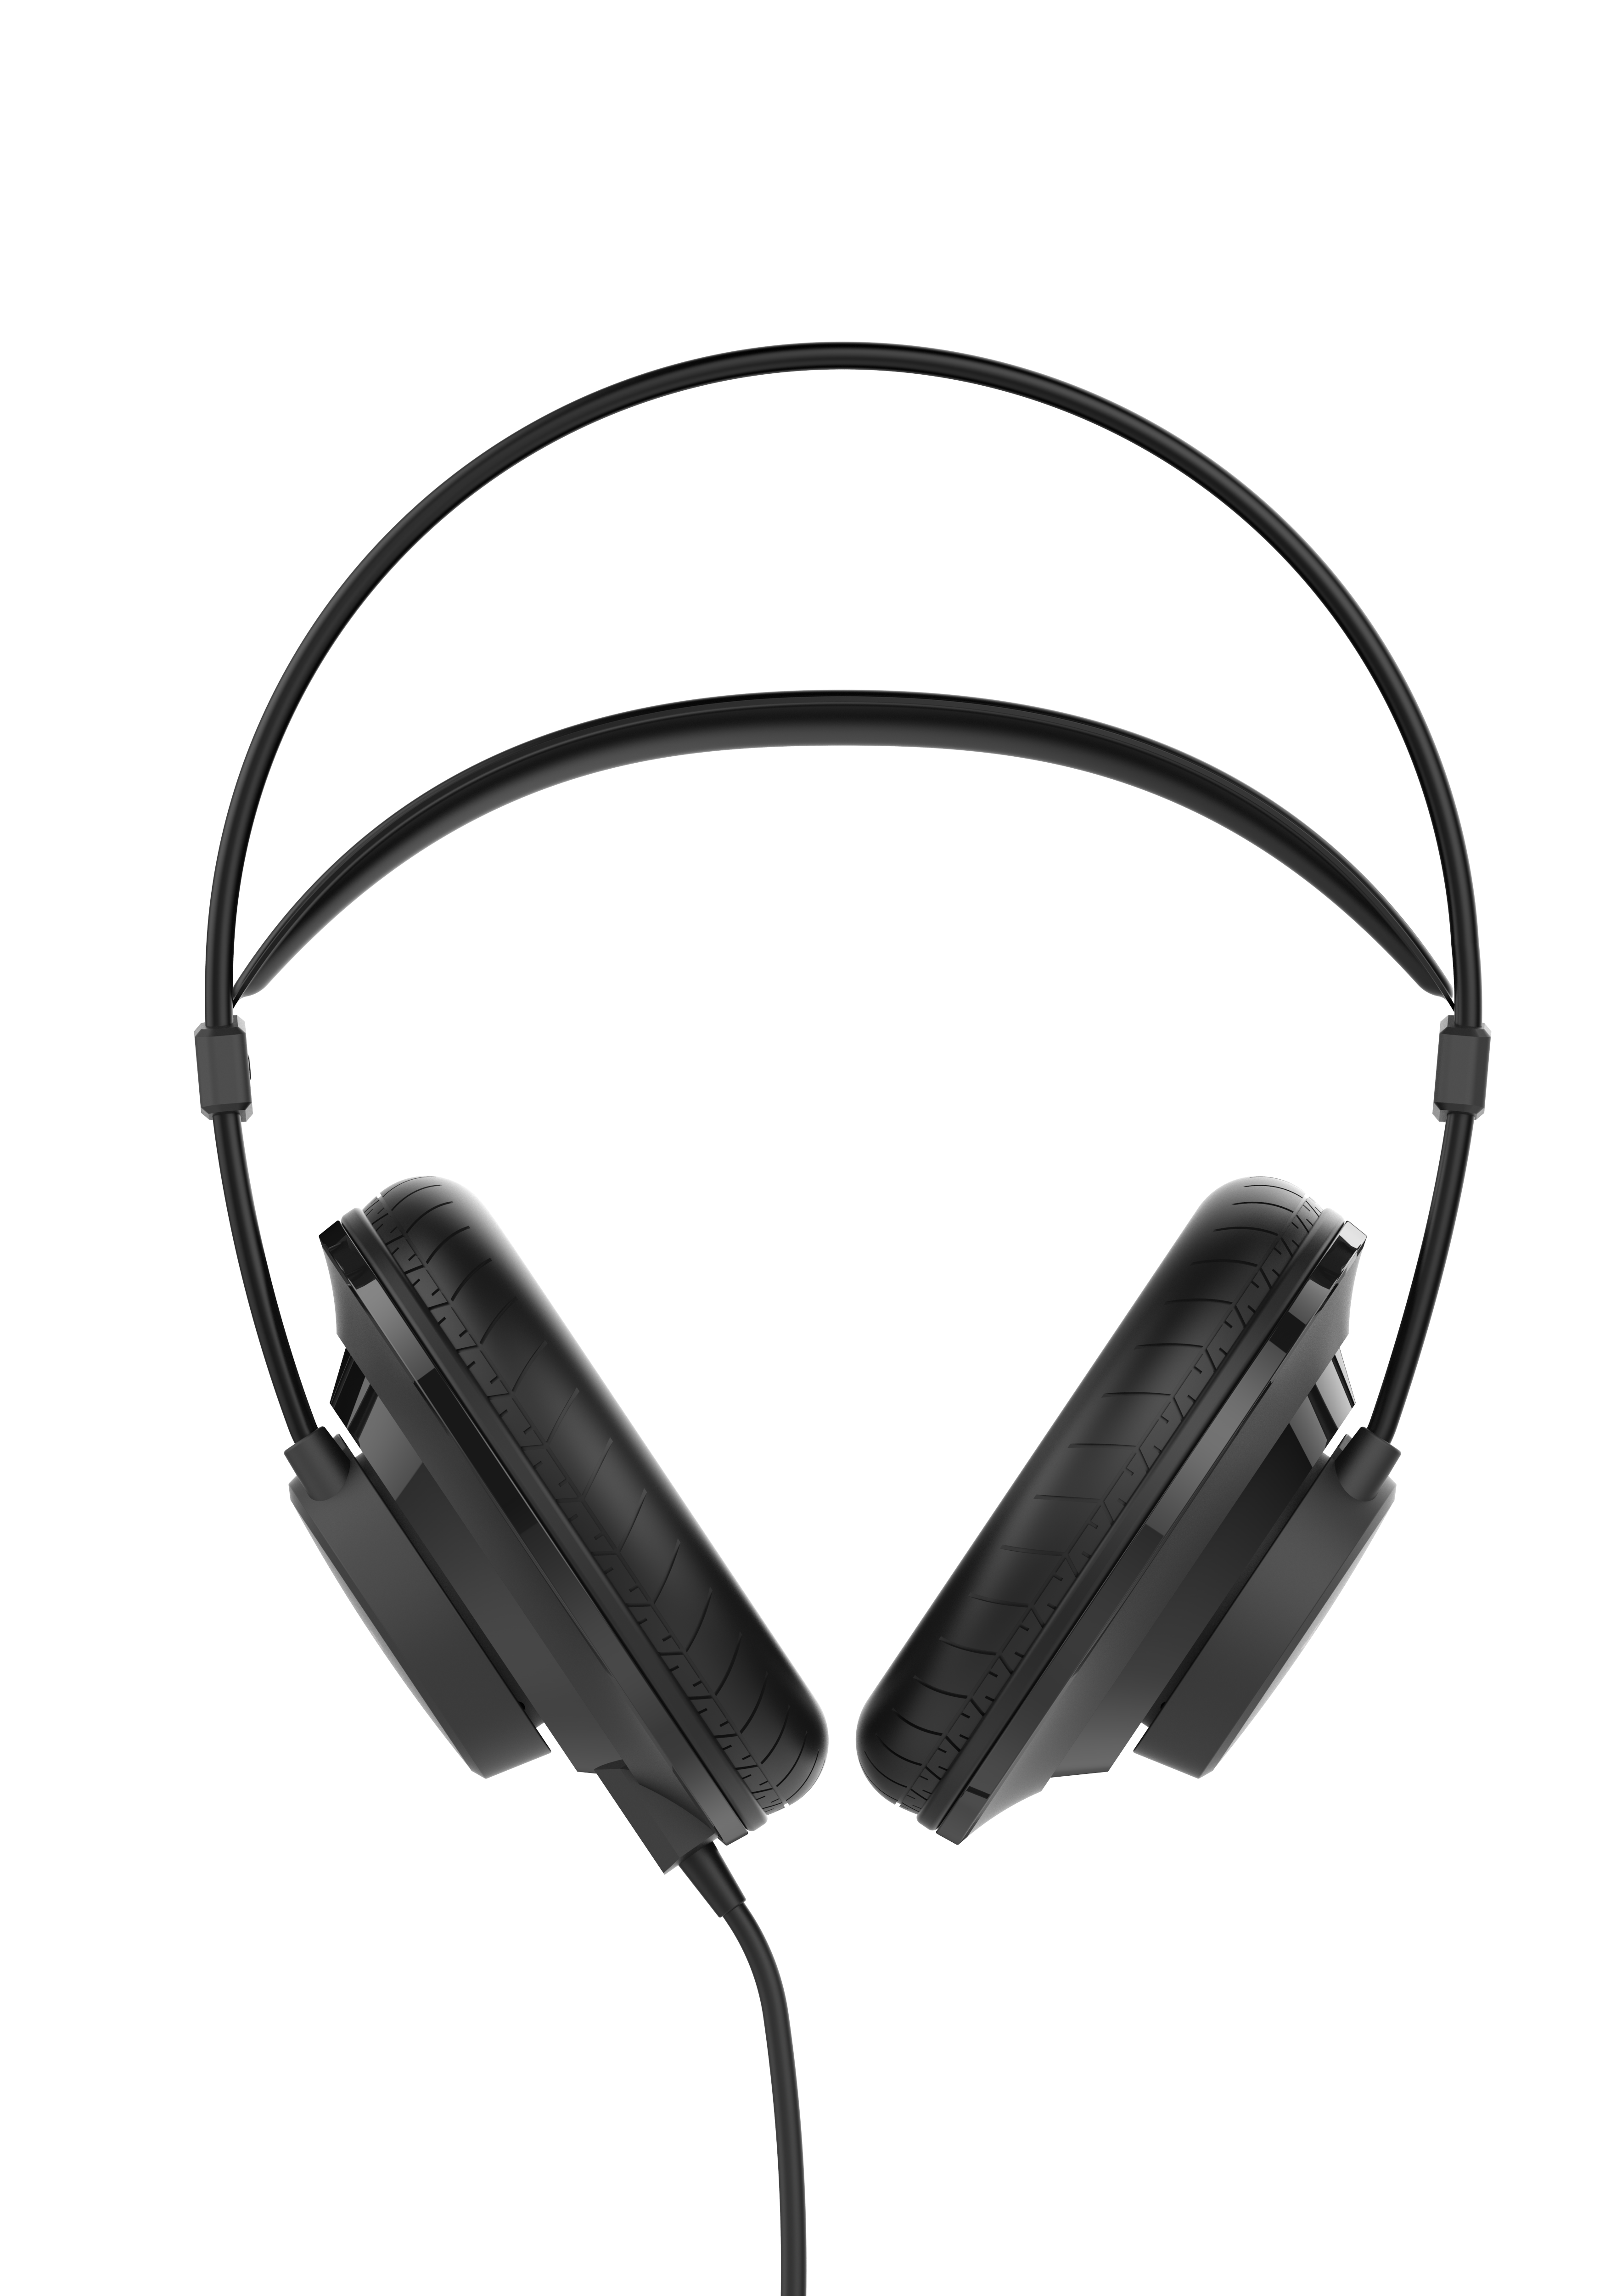 Superlux HD671 Over Ear Headphone Closed-back, Black